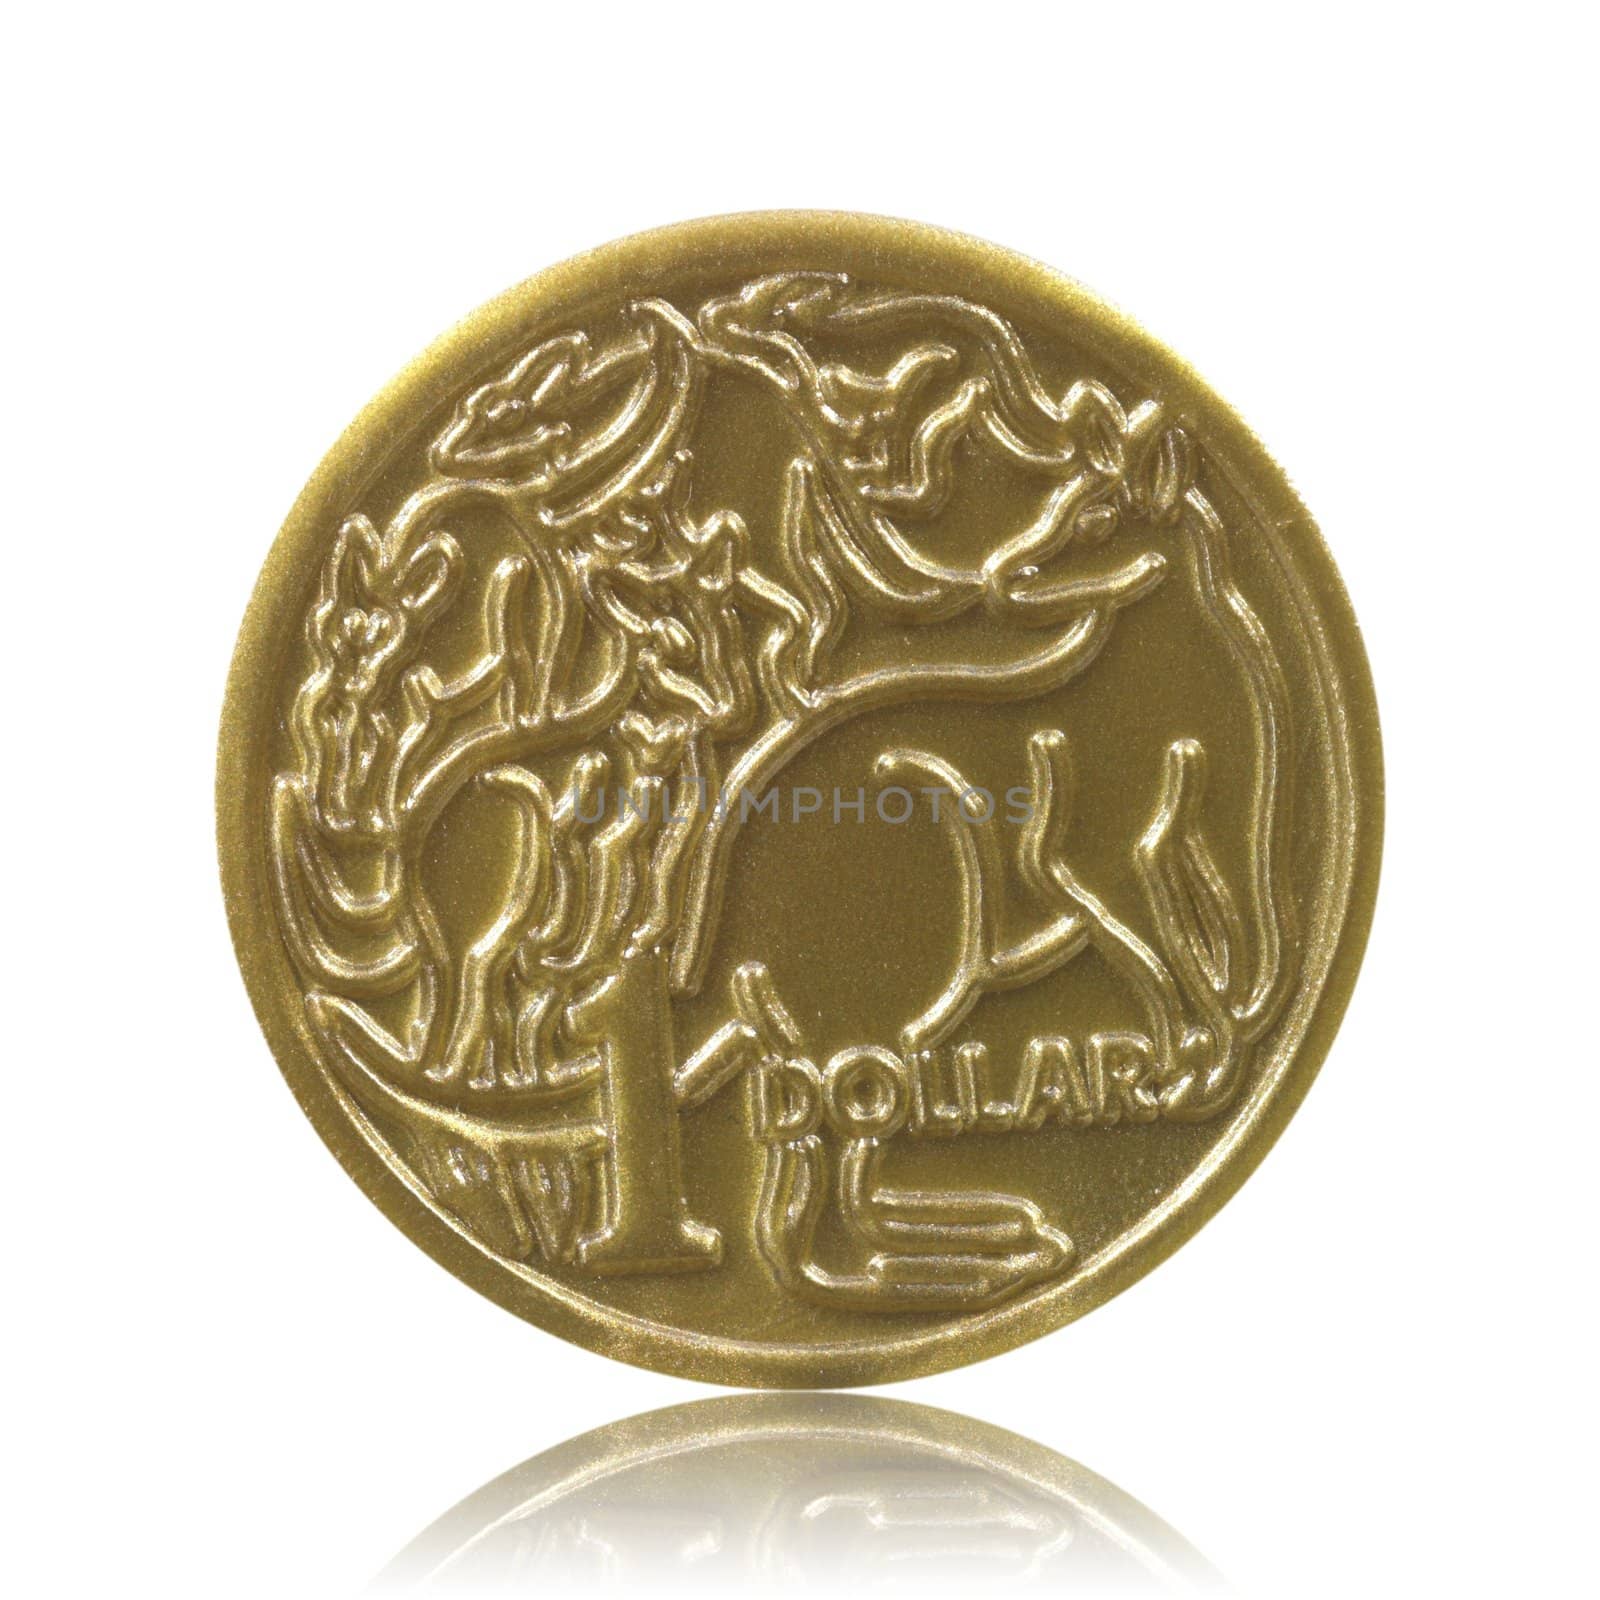 Australian Dollar Coin by Kitch